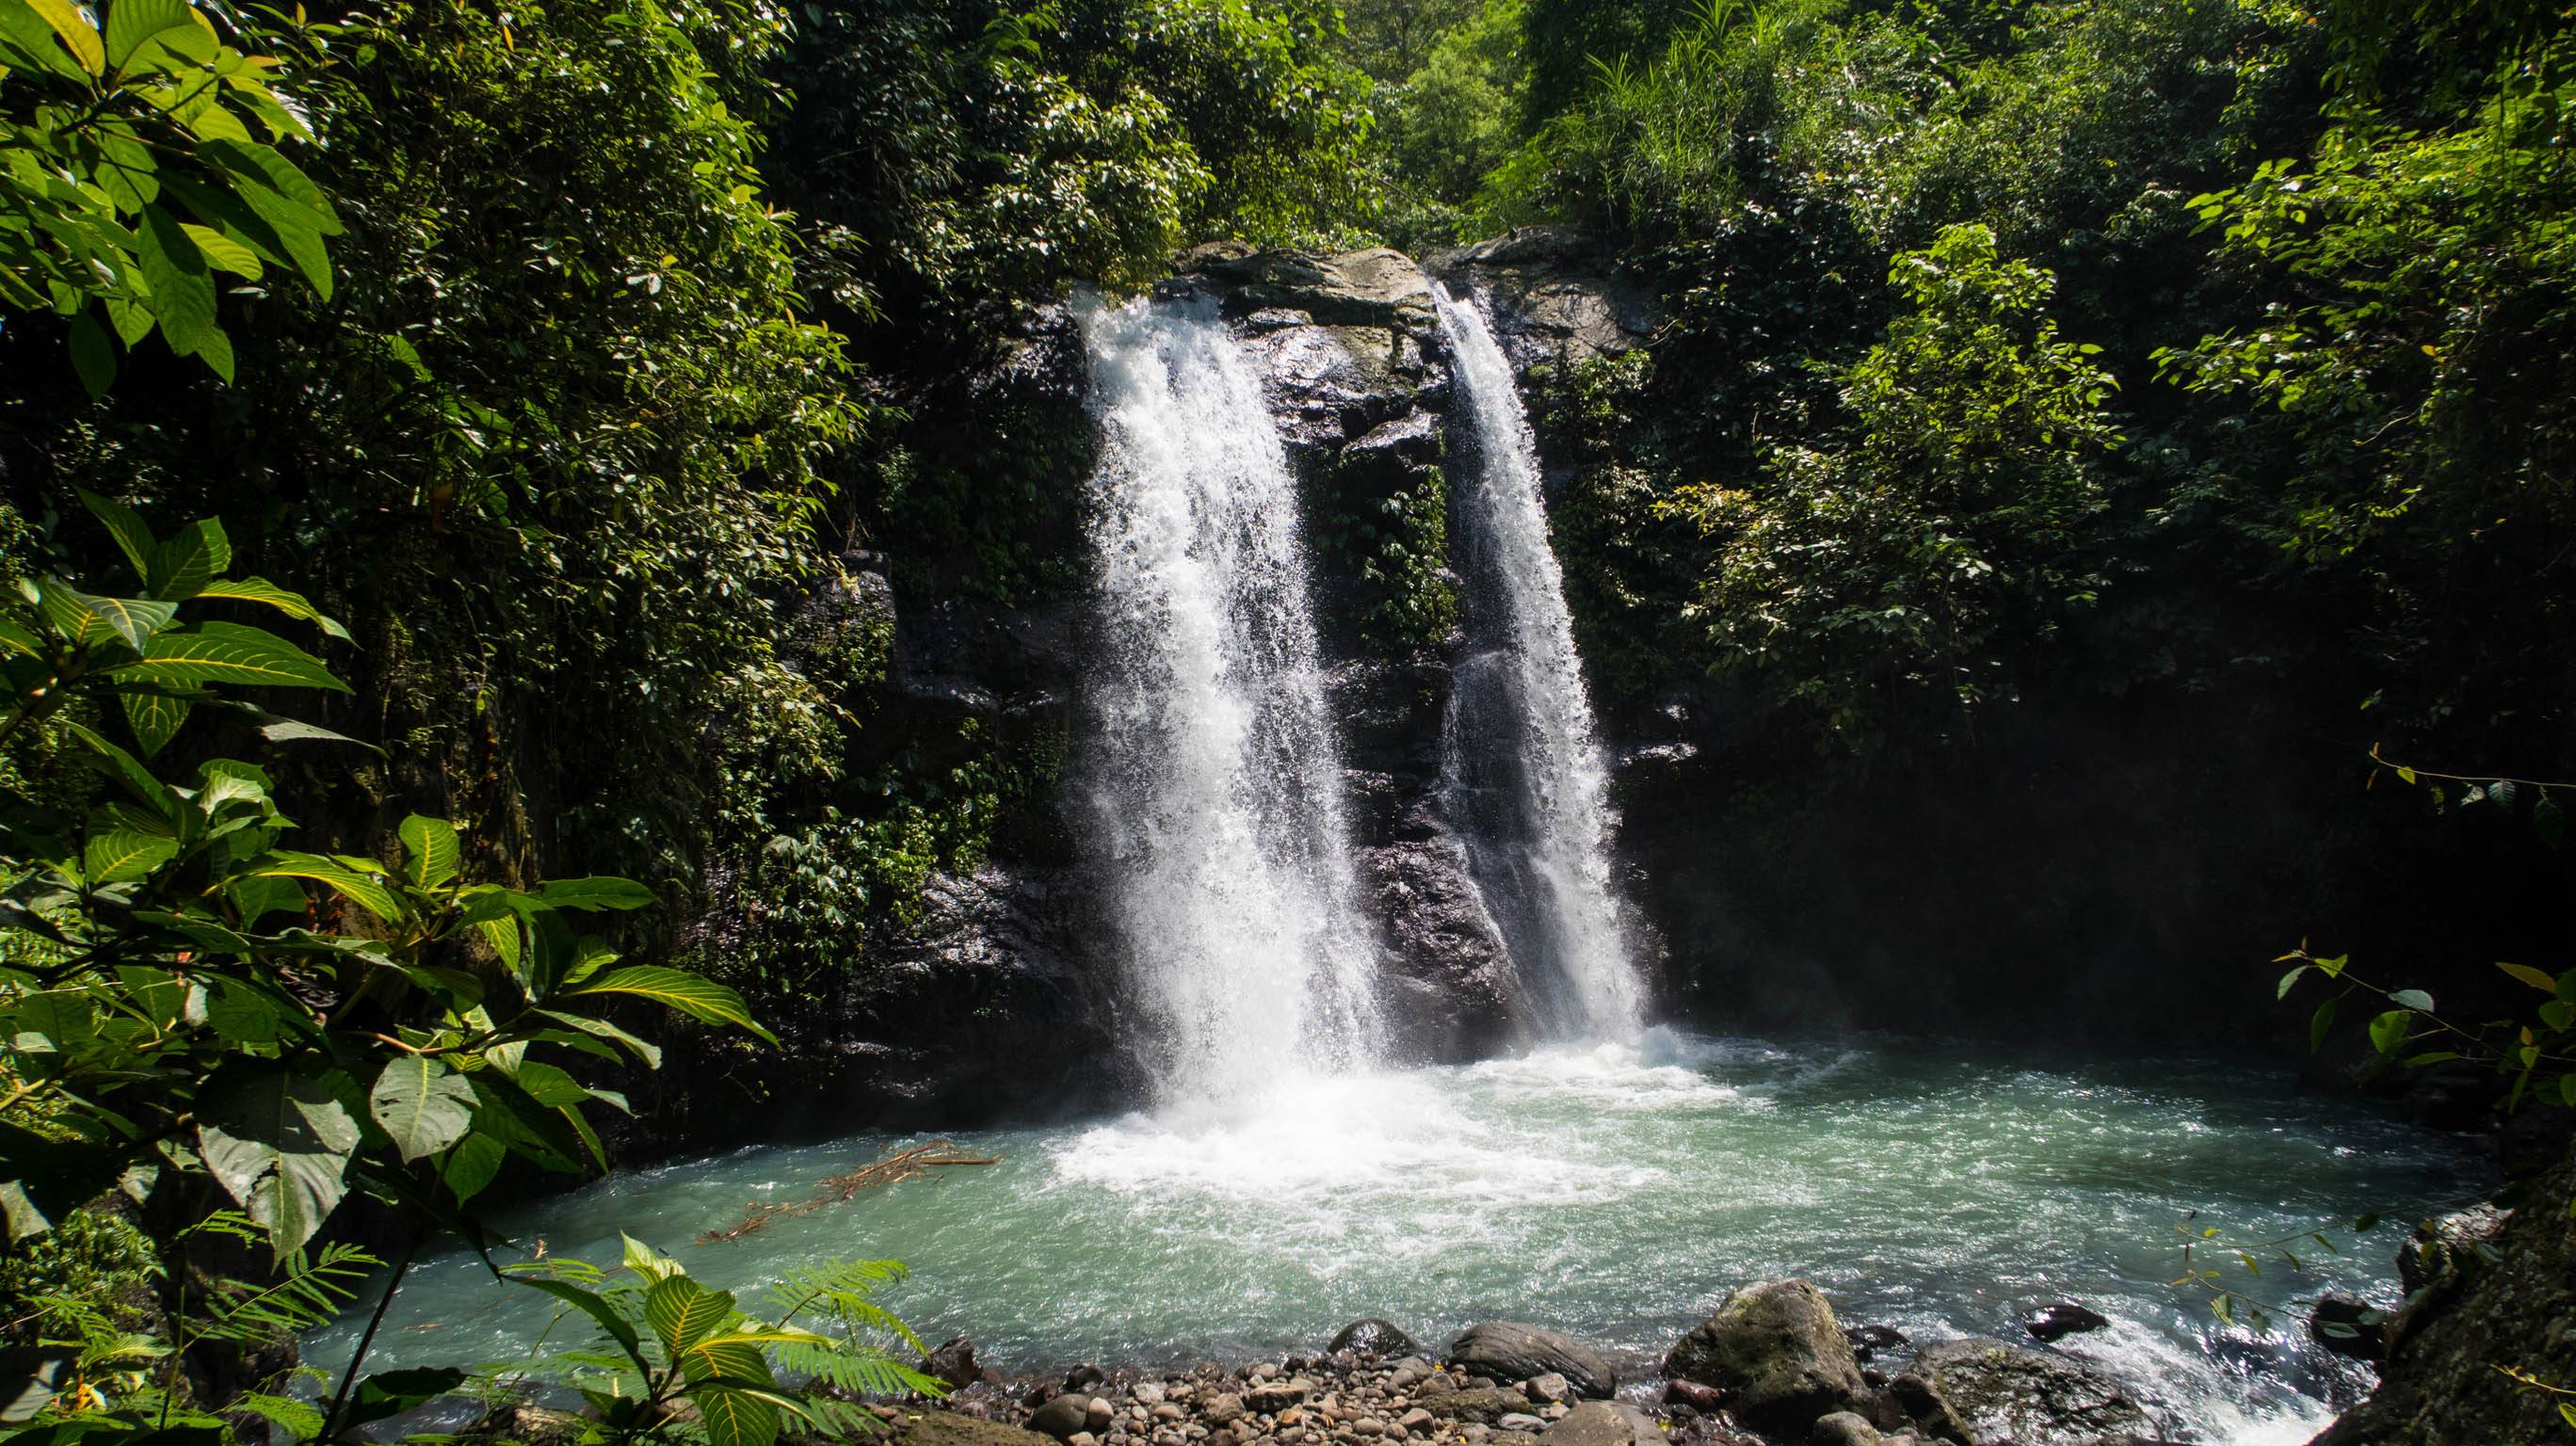 Exploring Juwuk Manis Waterfall in Bali